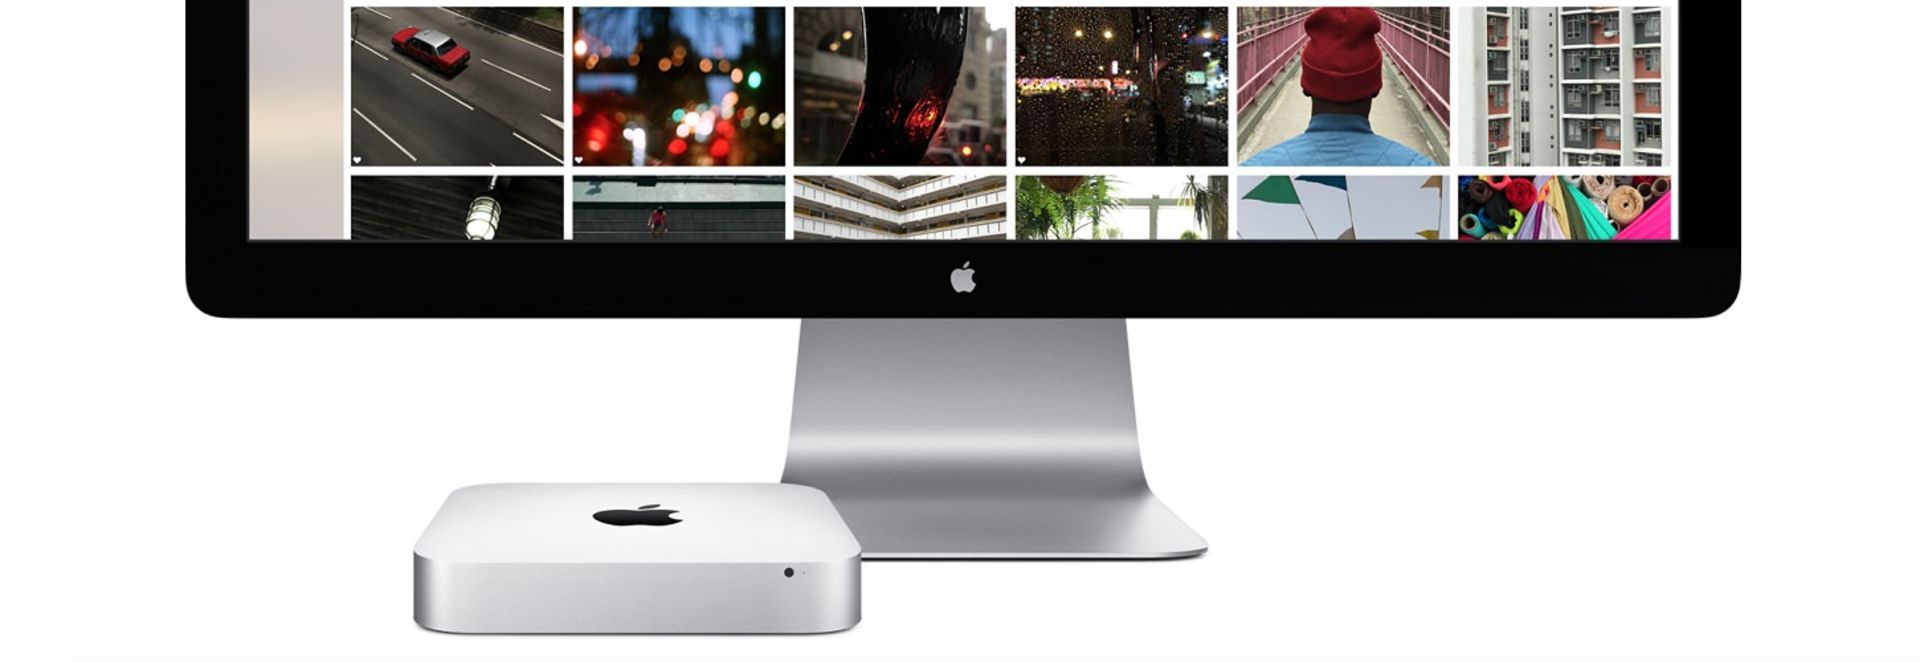 iMac and Mac Mini